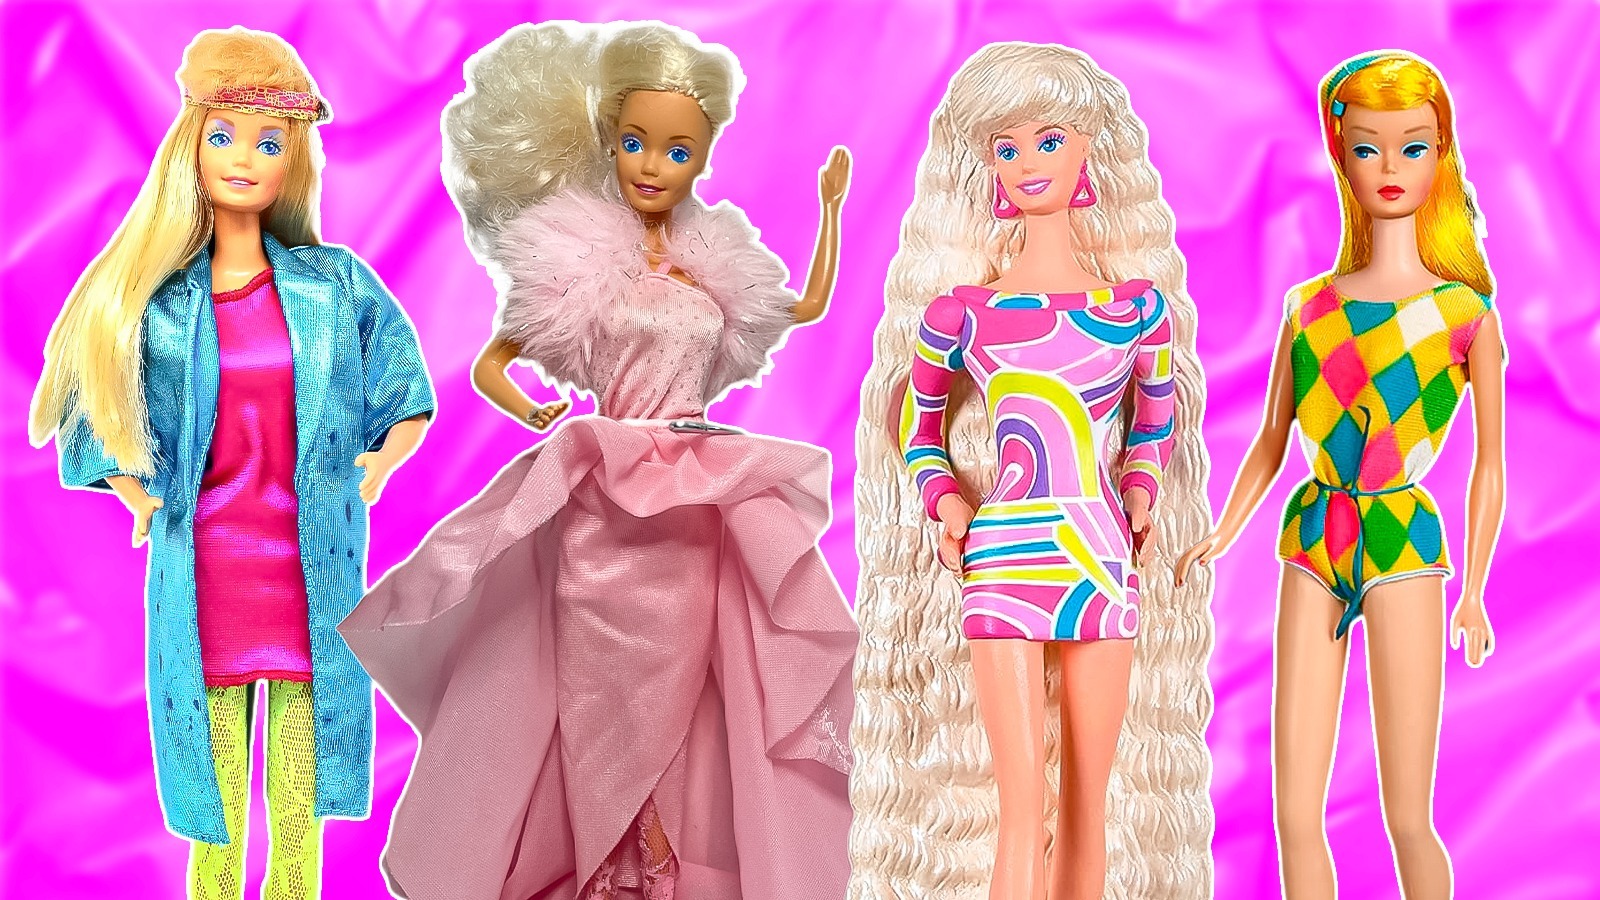 Barbie Collector Celebration Doll Blonde Hair Customizable